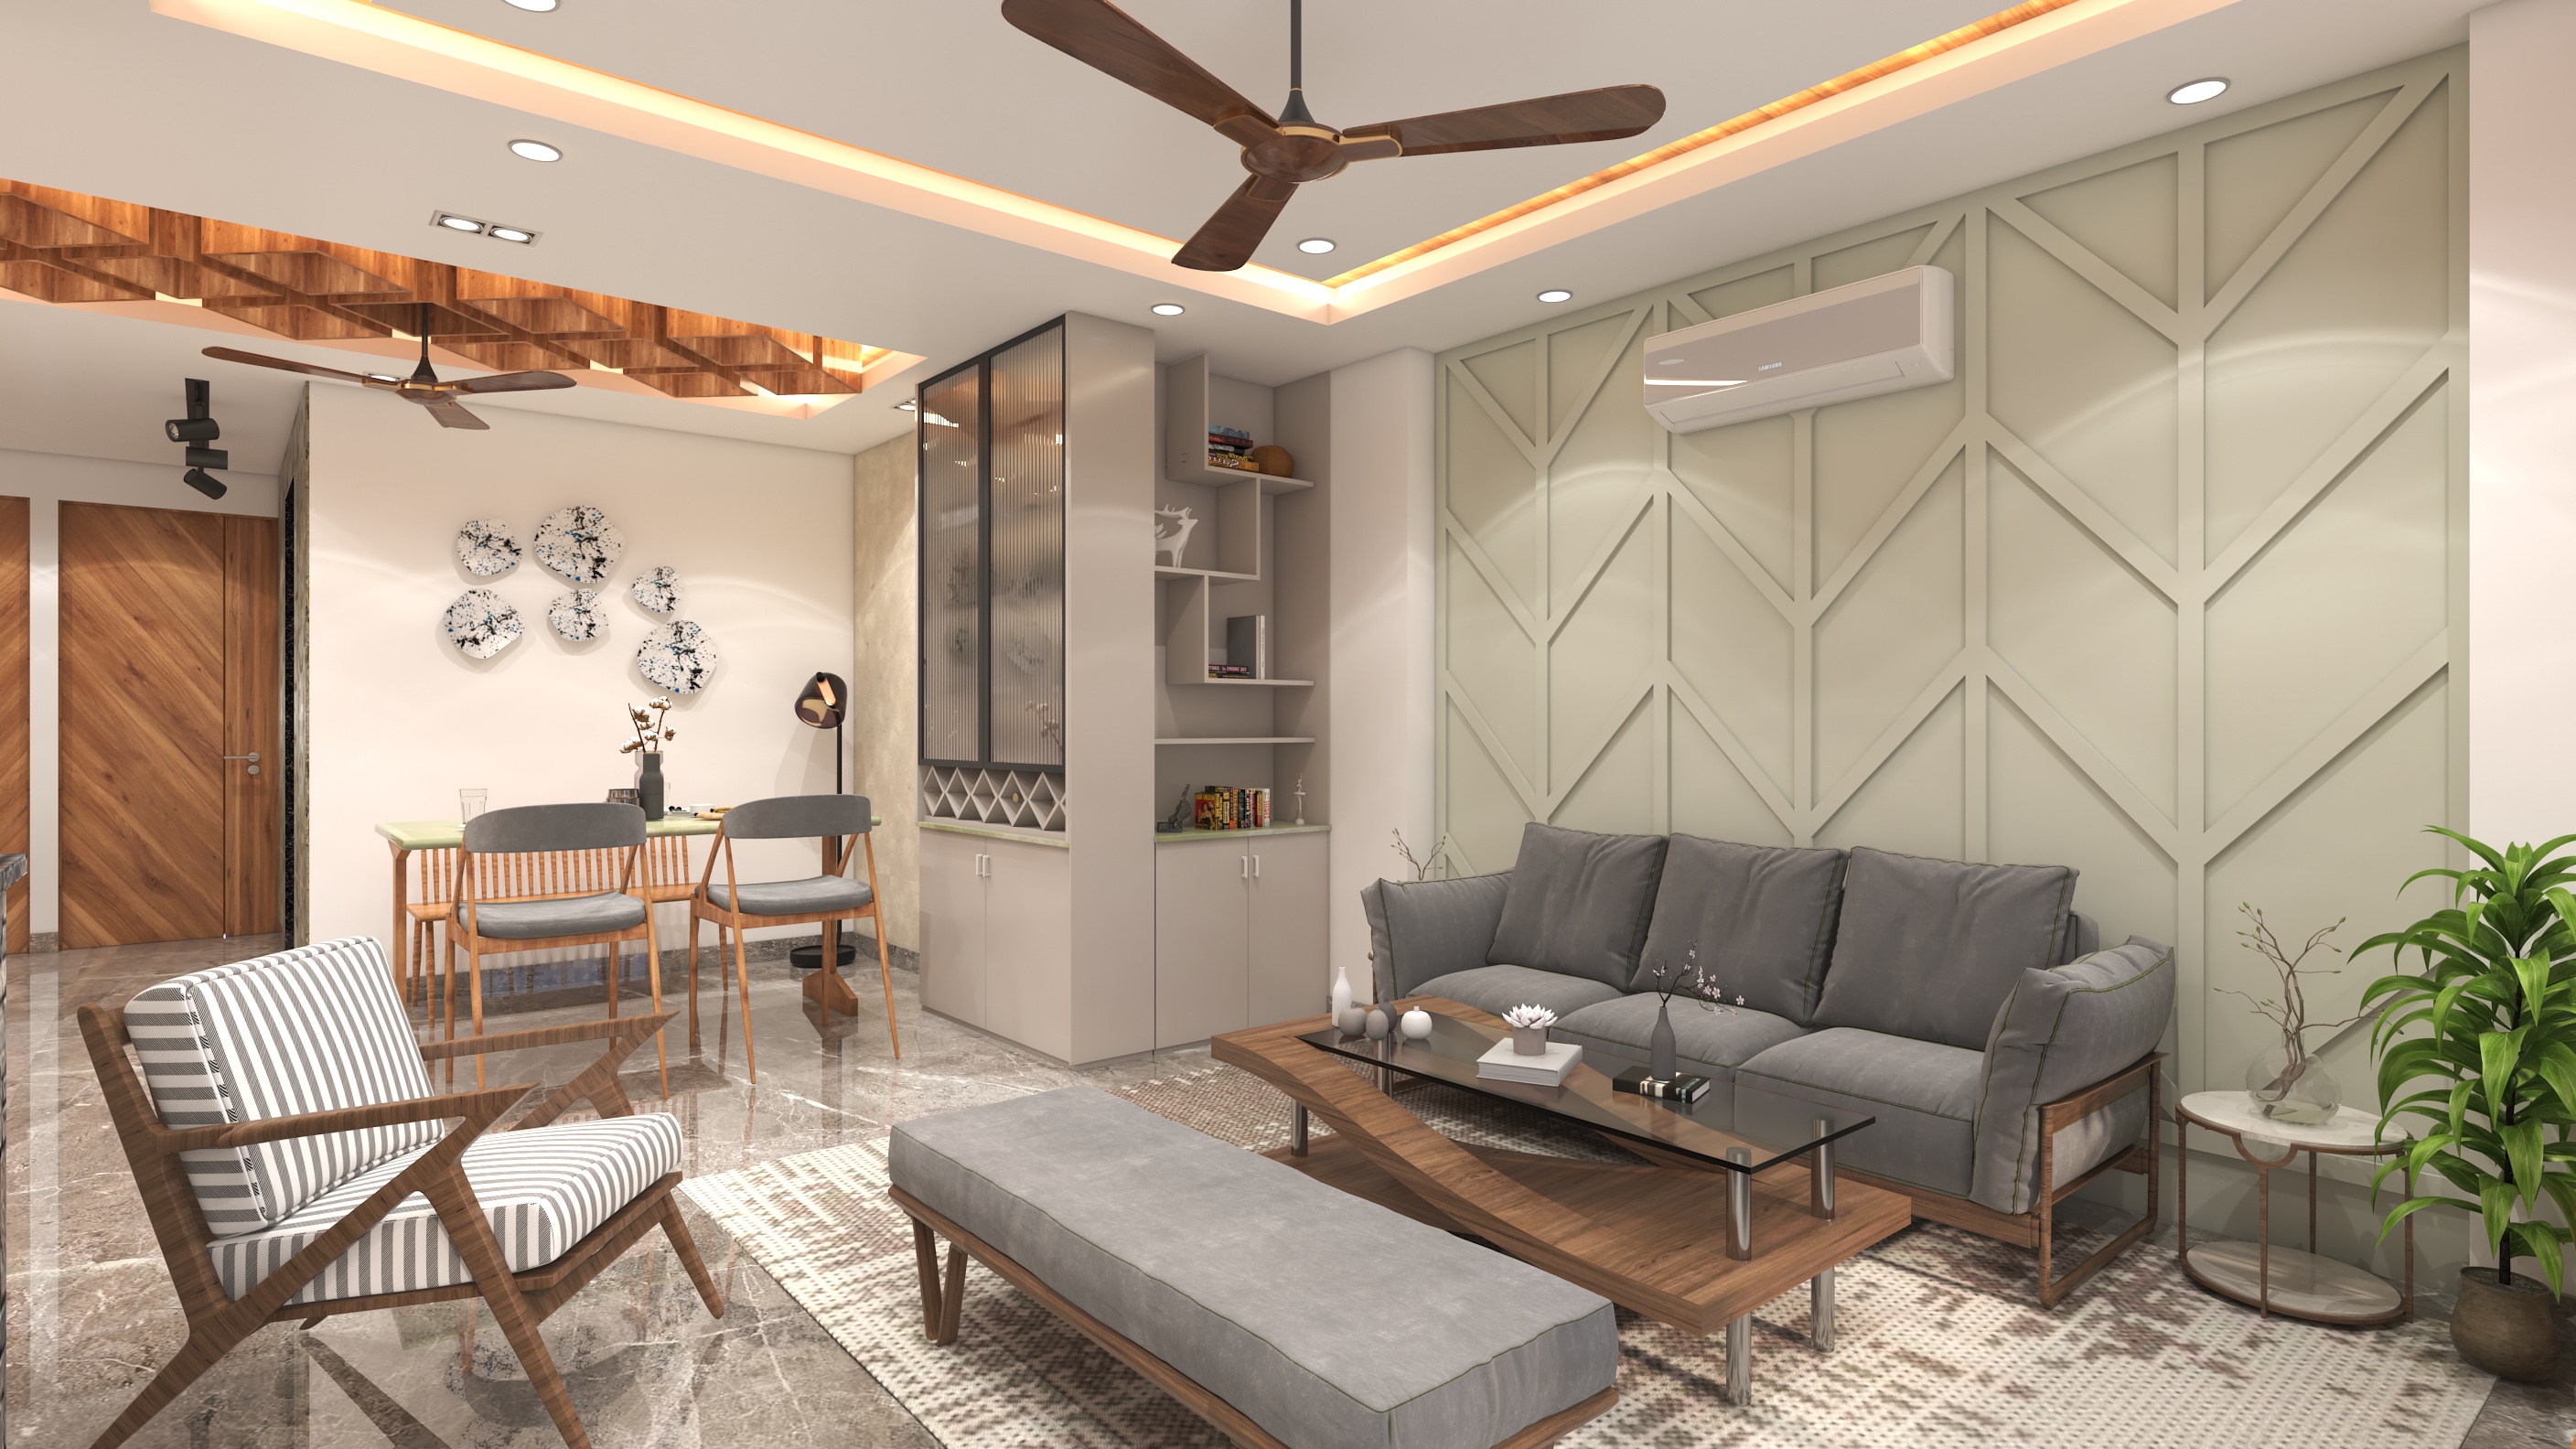 Lliving Room Design With a Neutral Colour Palette